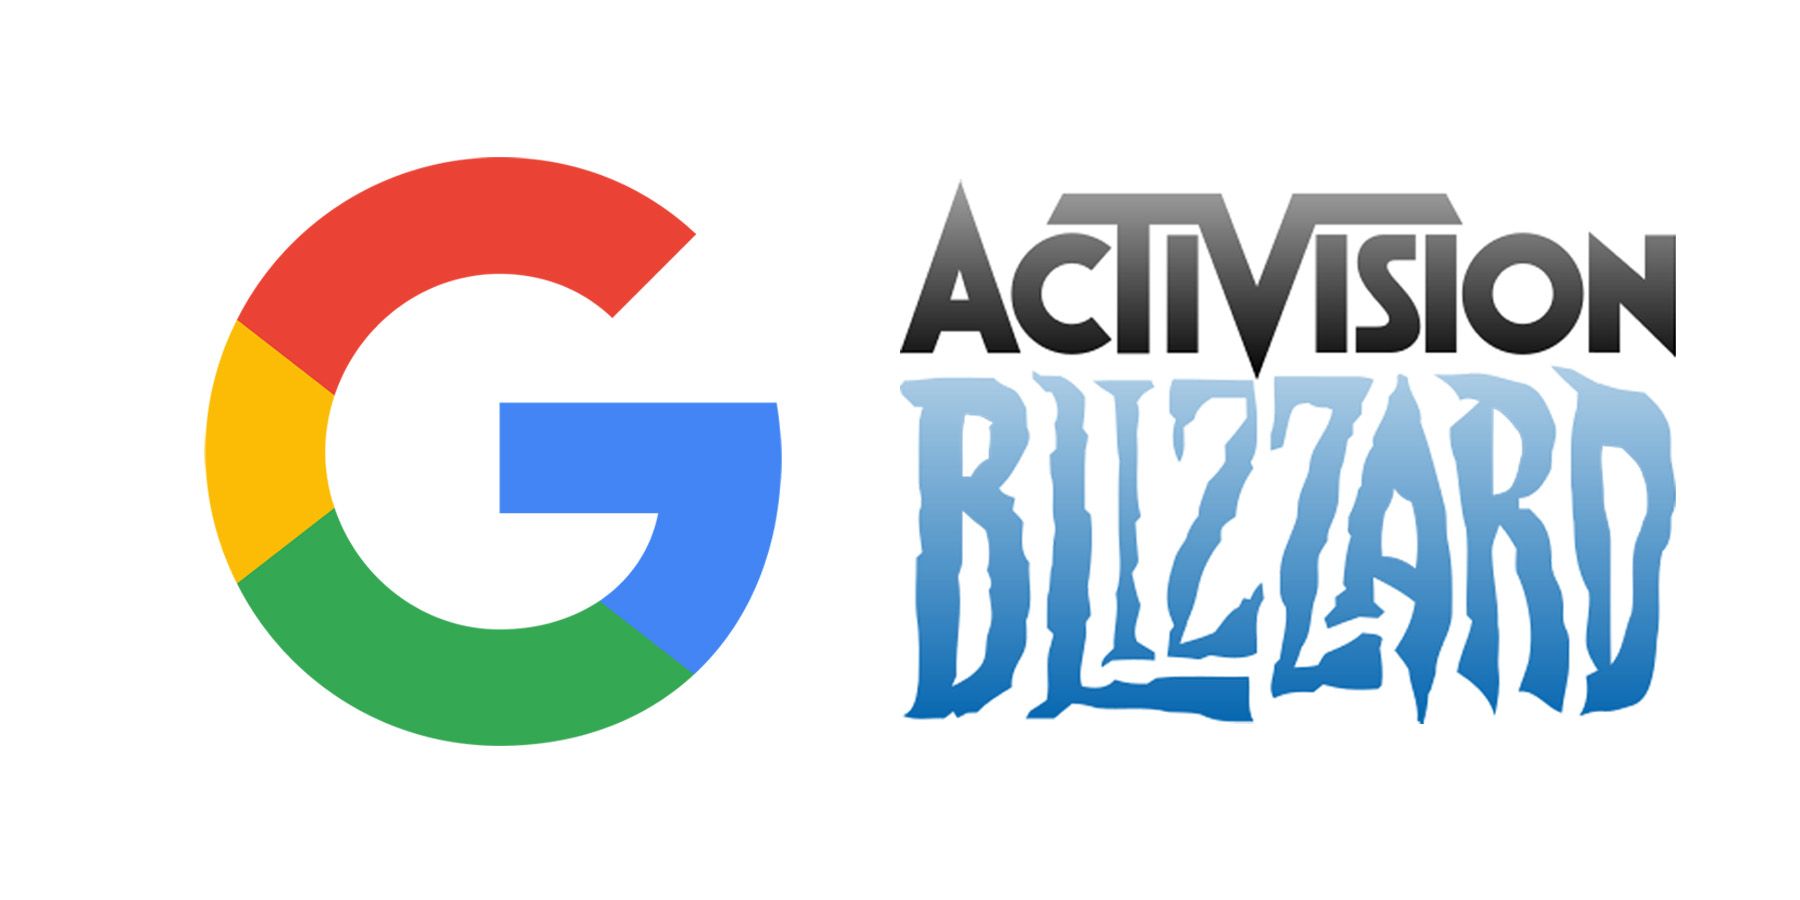 google and activision blizzard logo